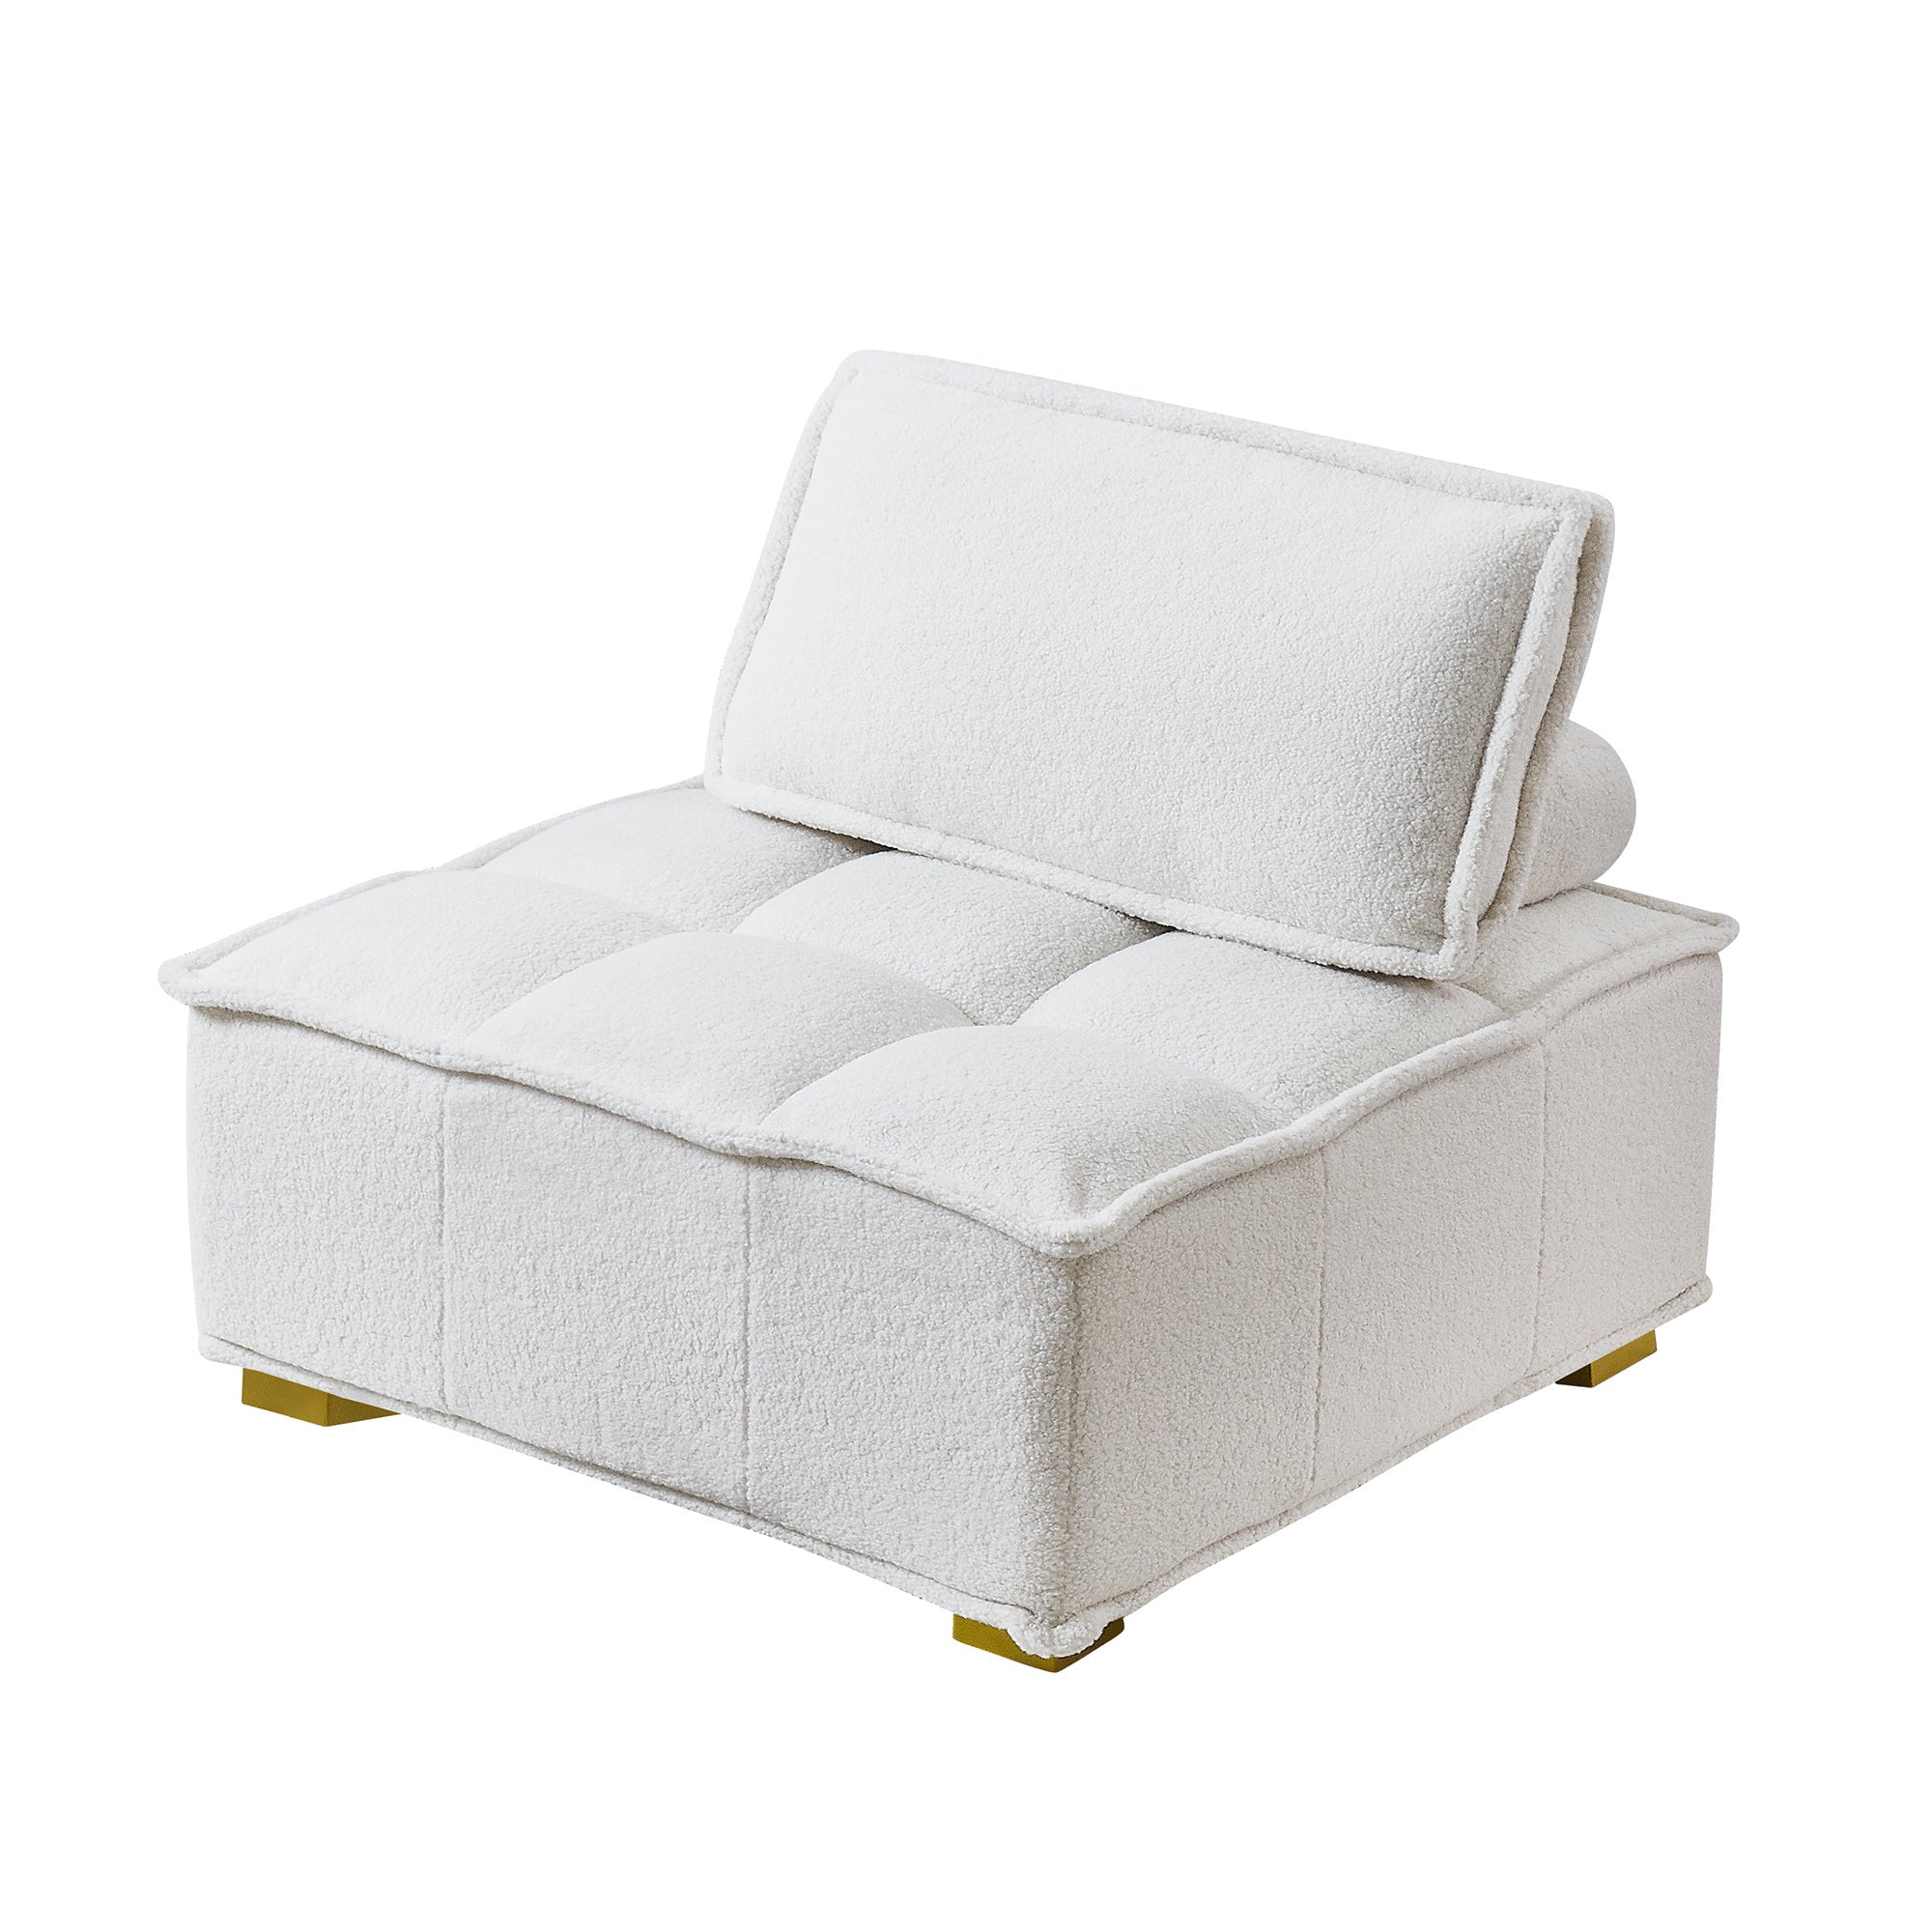 Lazy sofa ottoman with gold wooden legs teddy fabric white-foam-fabric